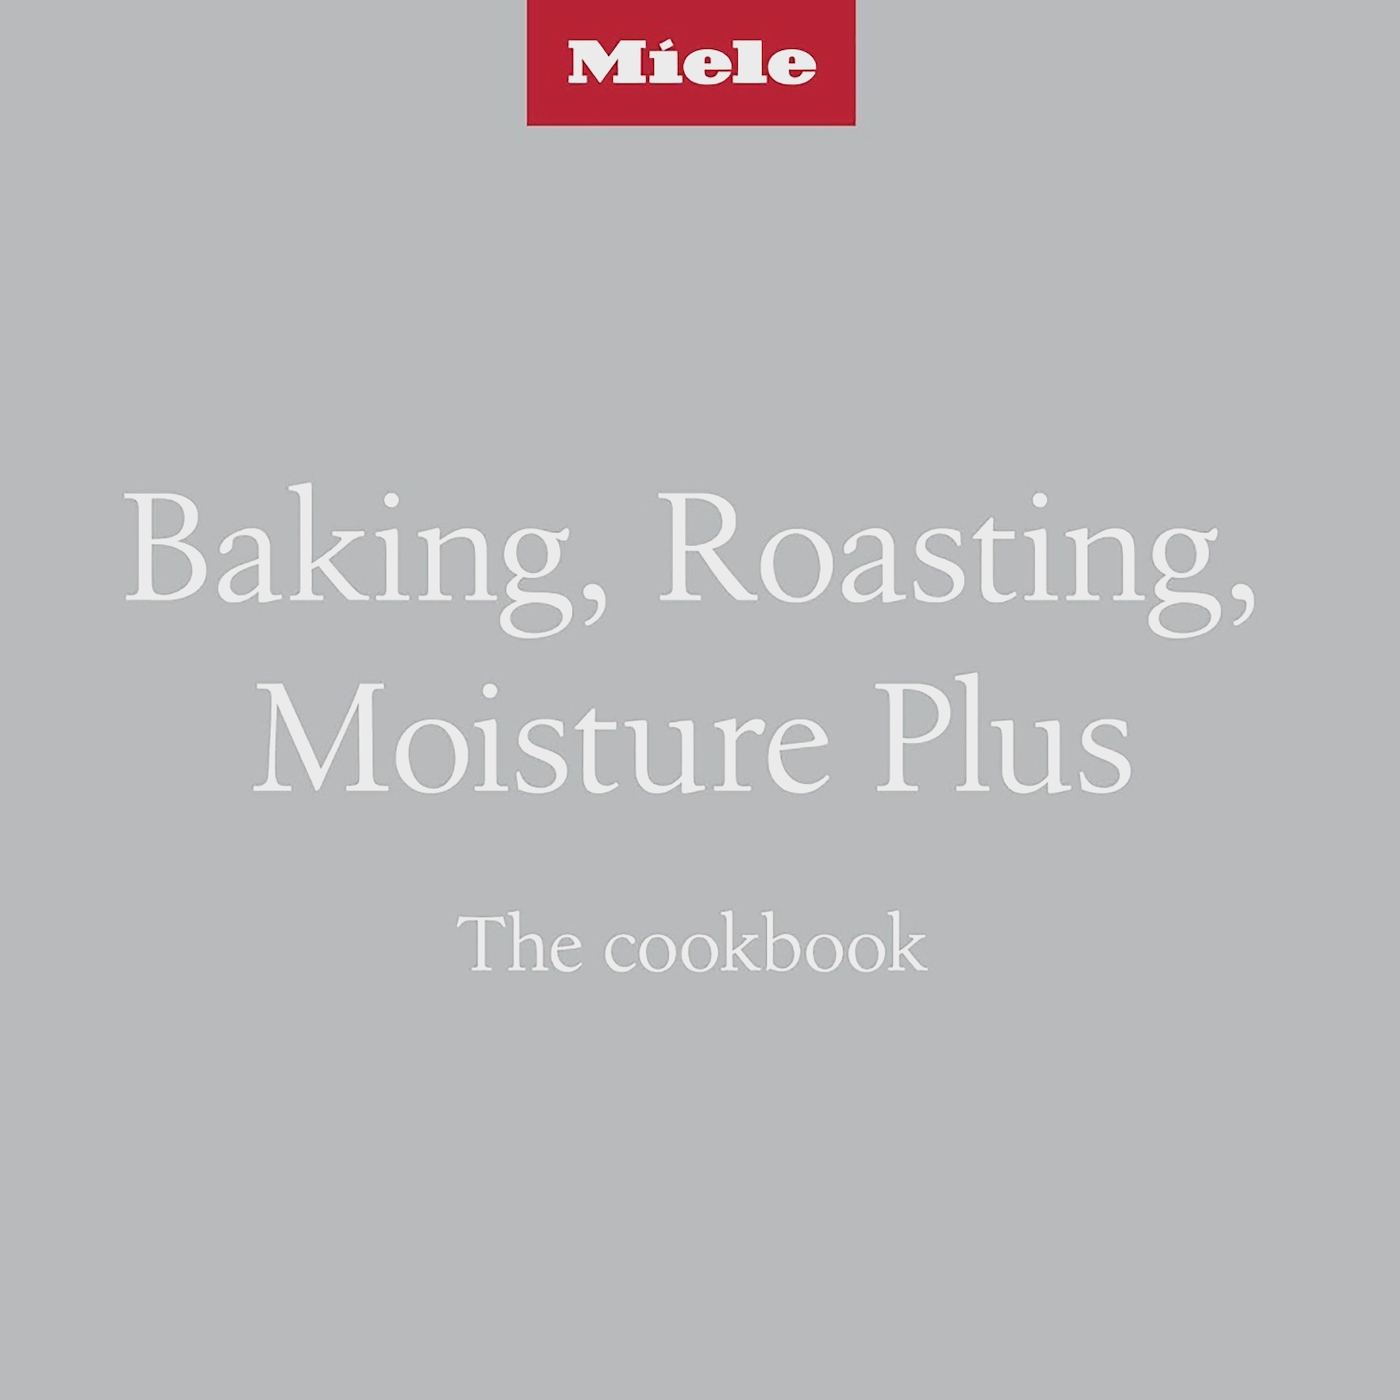 Baking Roasting Cookbook Voucher Redemption - Moisture Plus Ovens product photo Front View ZOOM